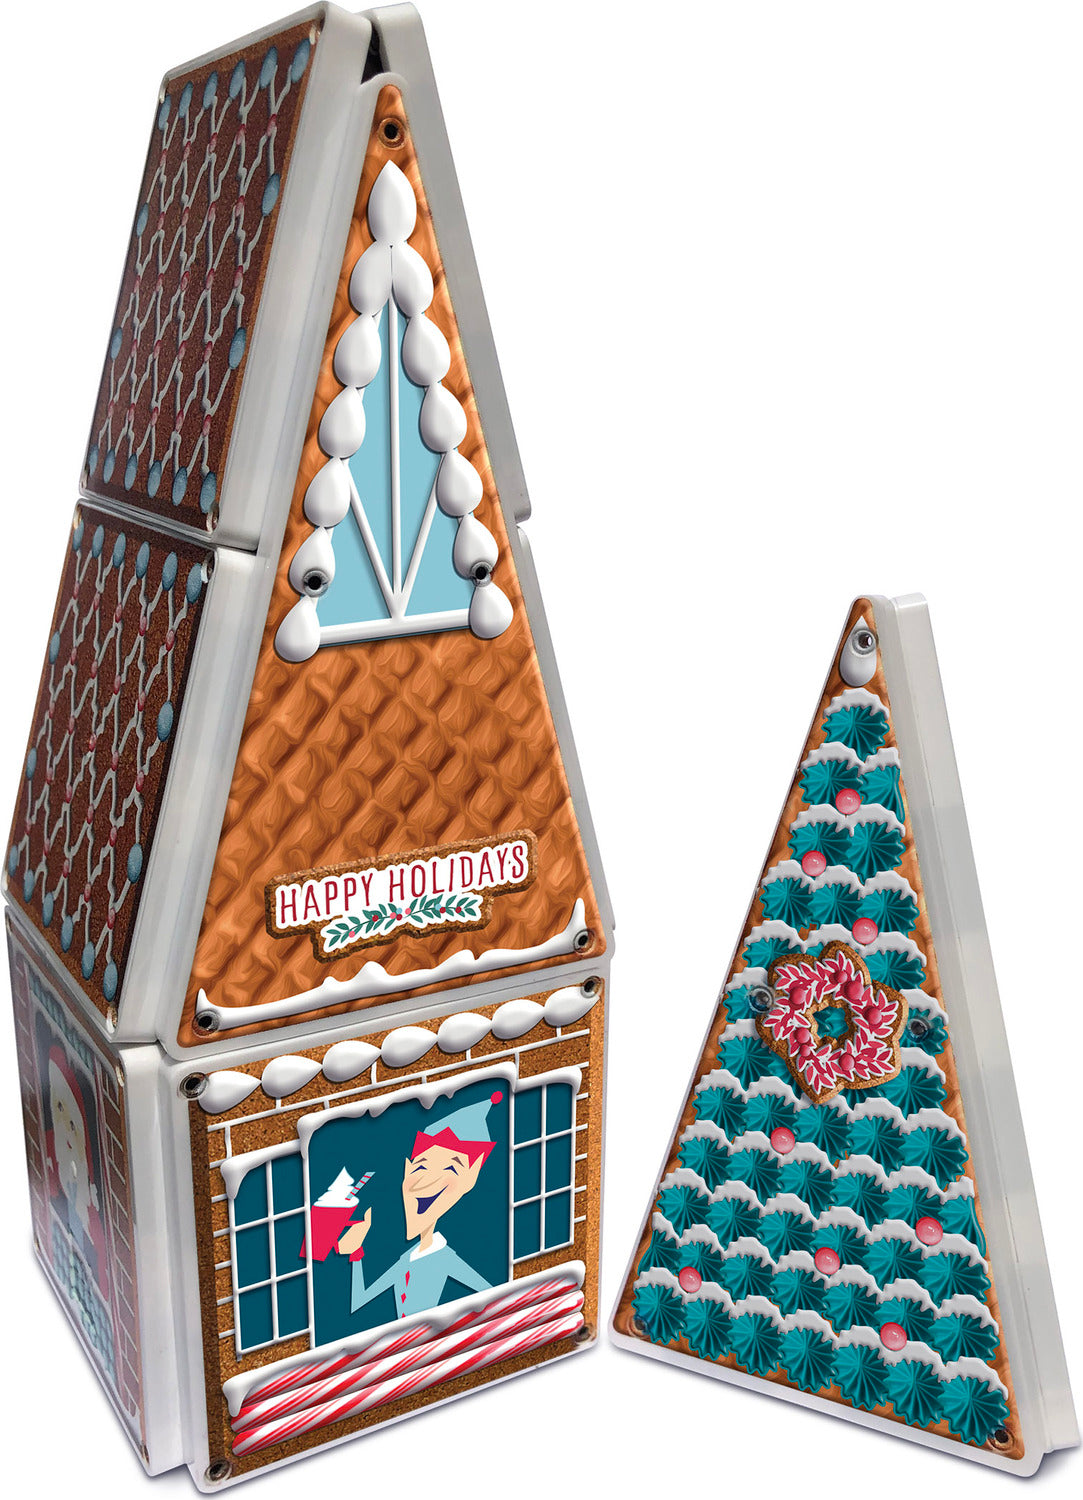 Magna-tiles Structures Gingerbread Advent Calendar 2021